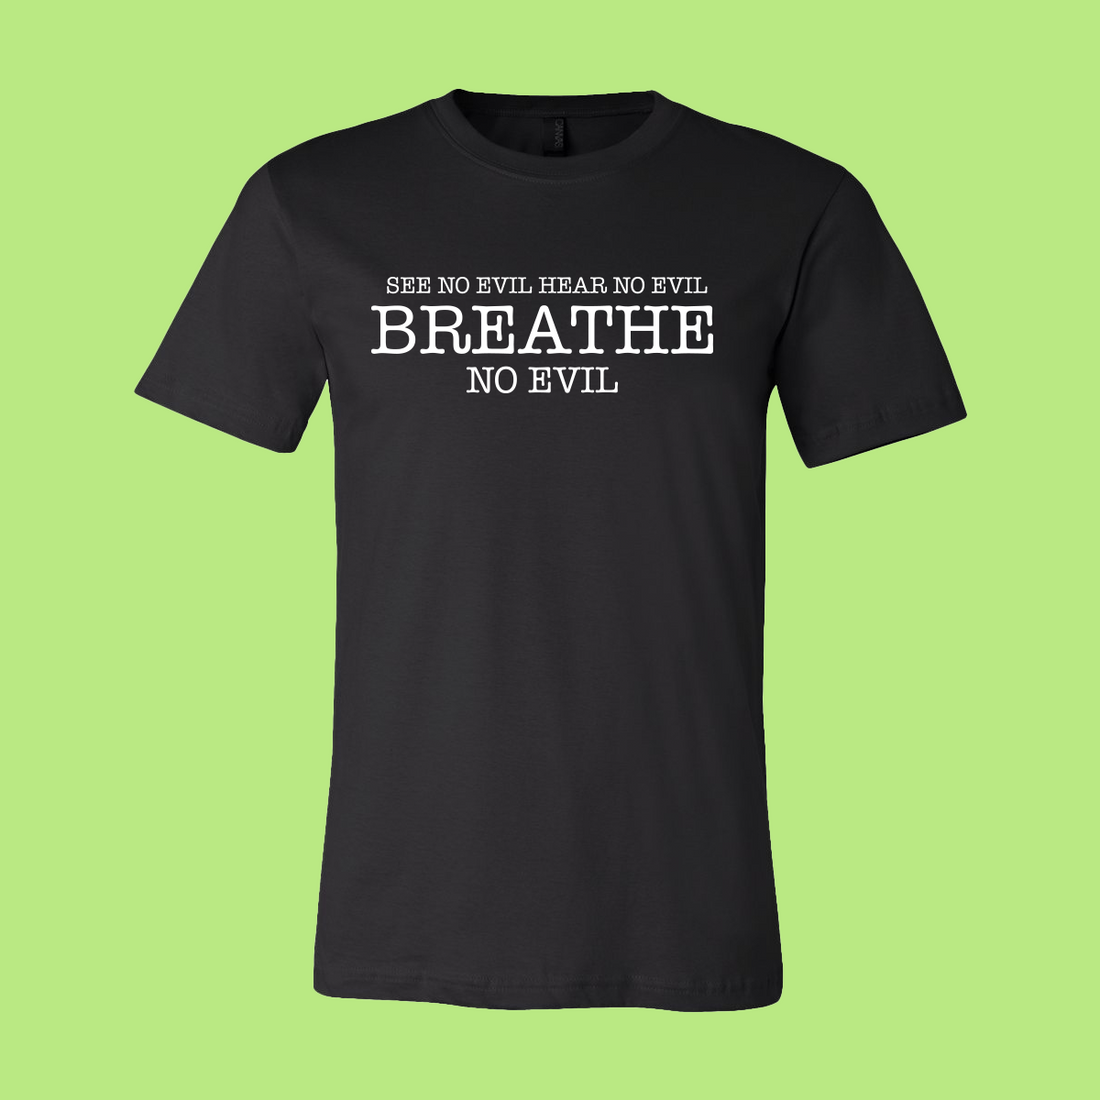 Breathe No Evil (Black T-Shirt)